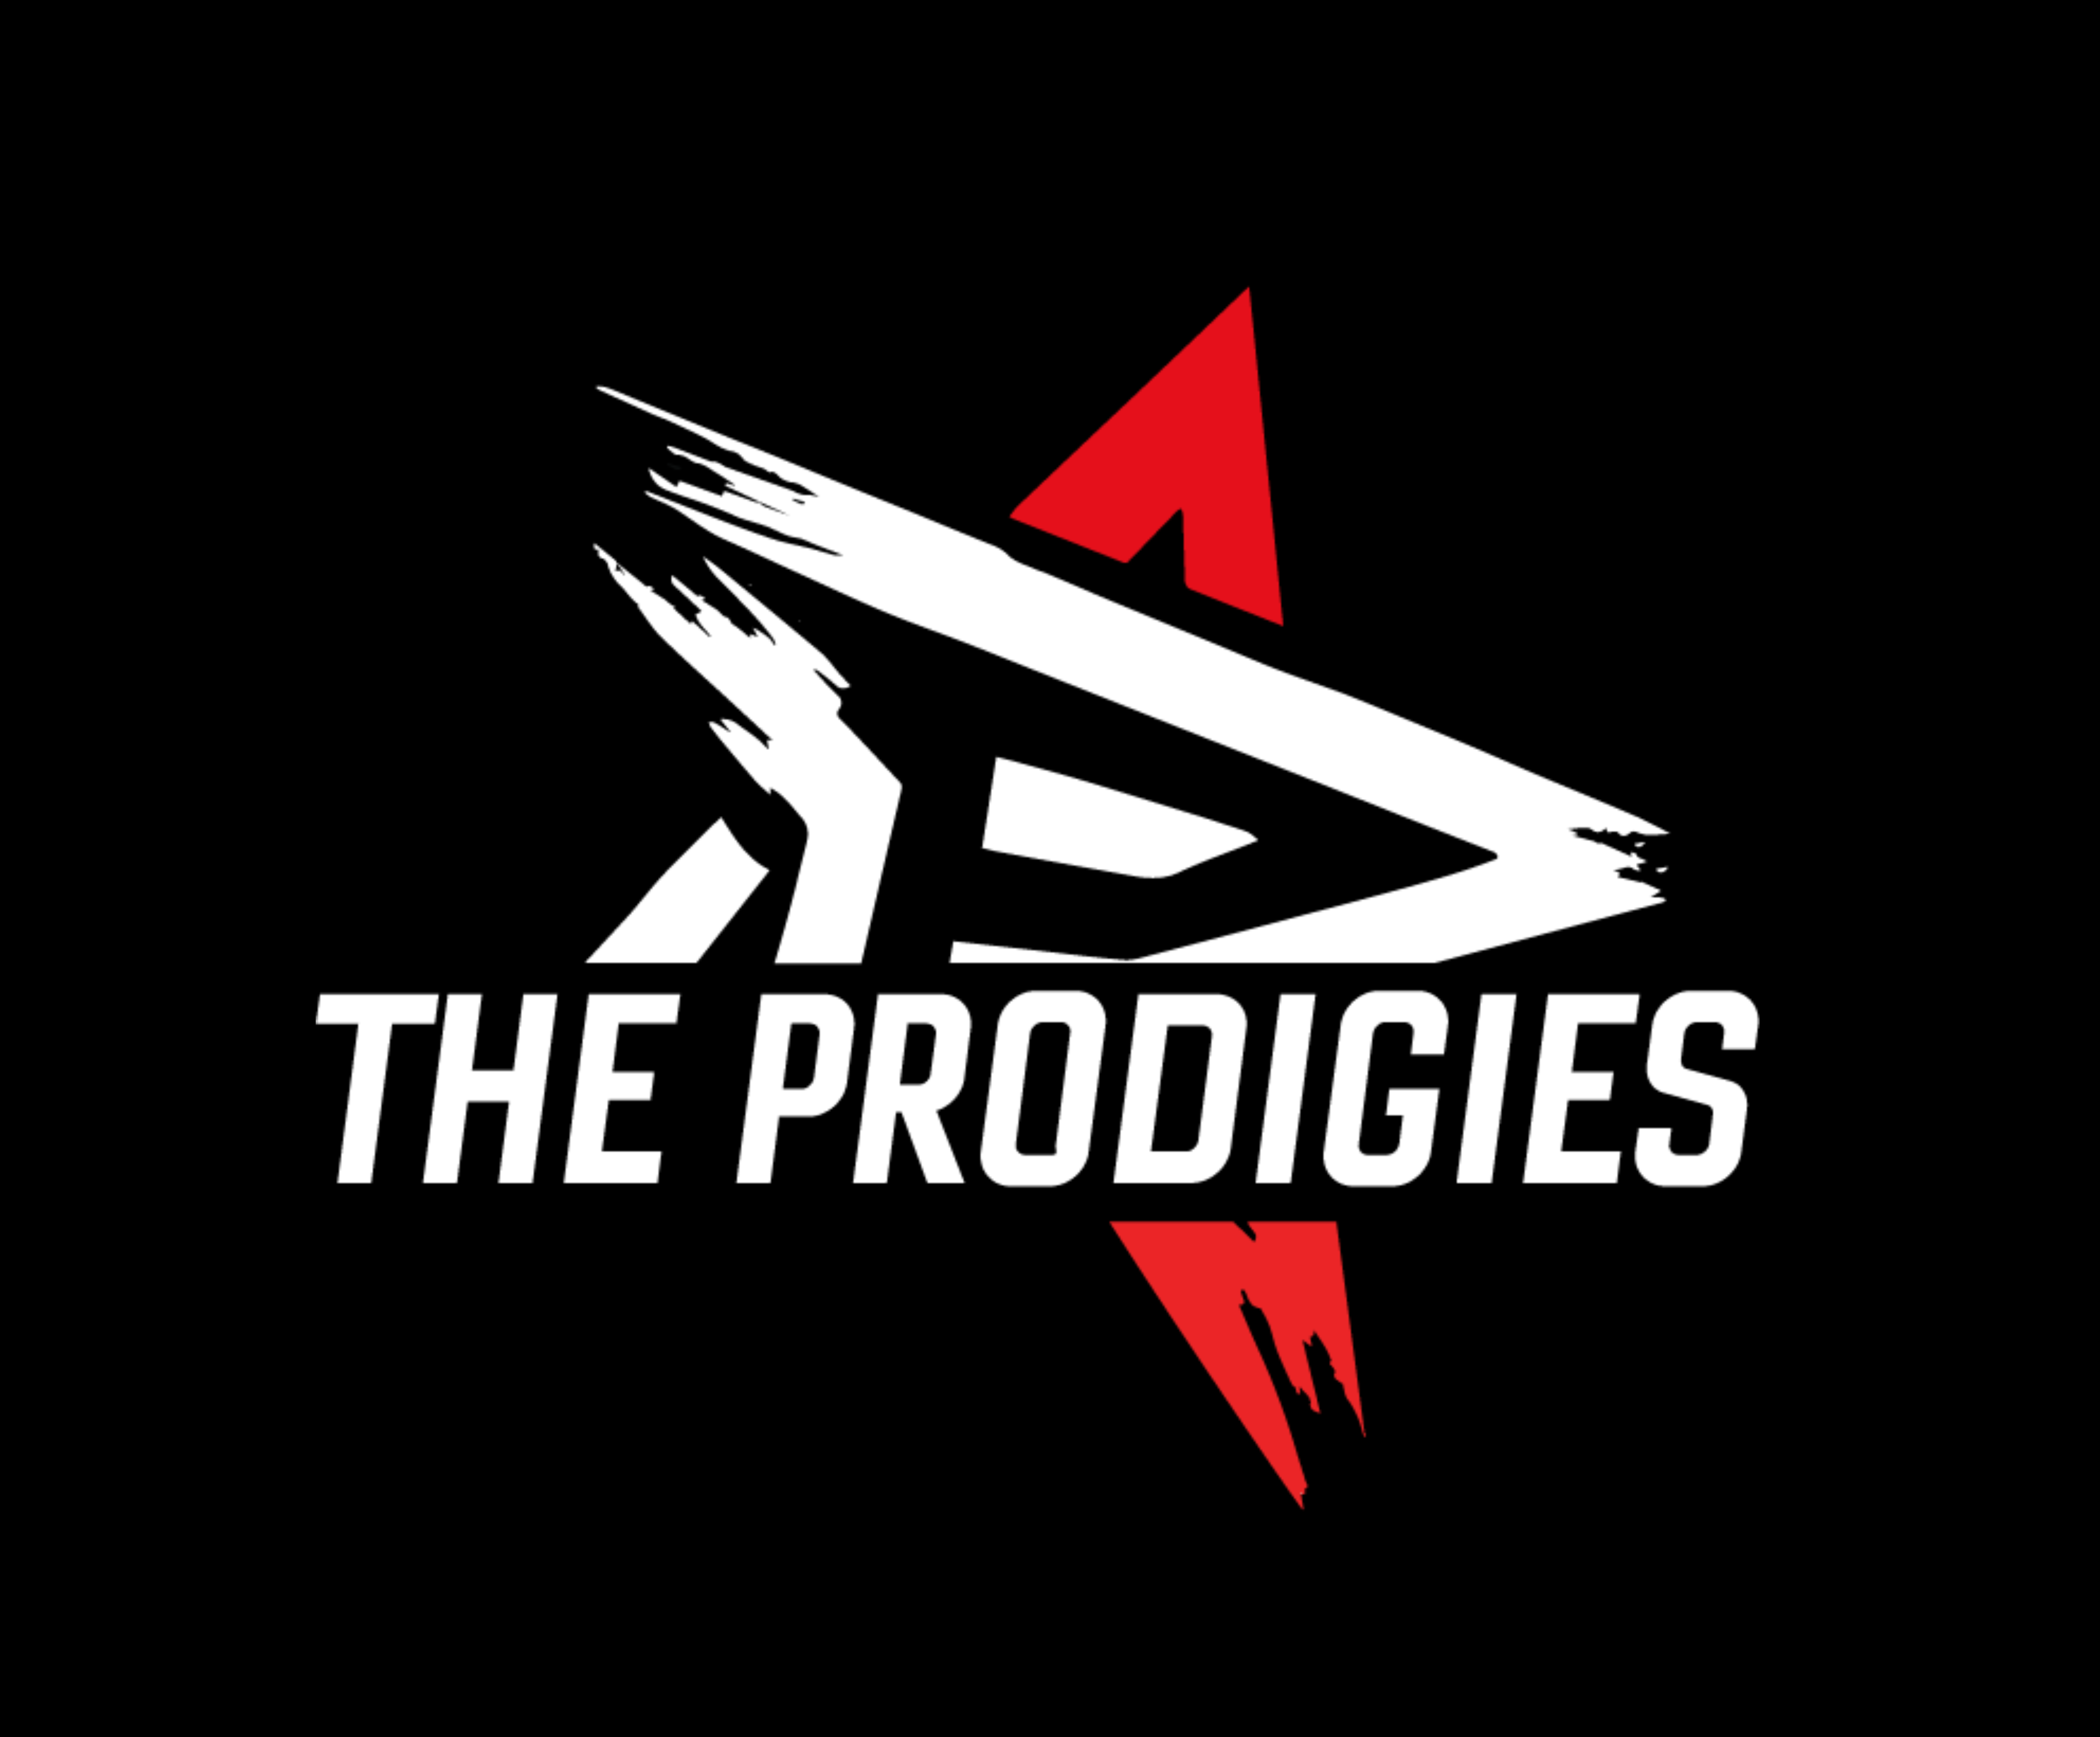 The Prodigies